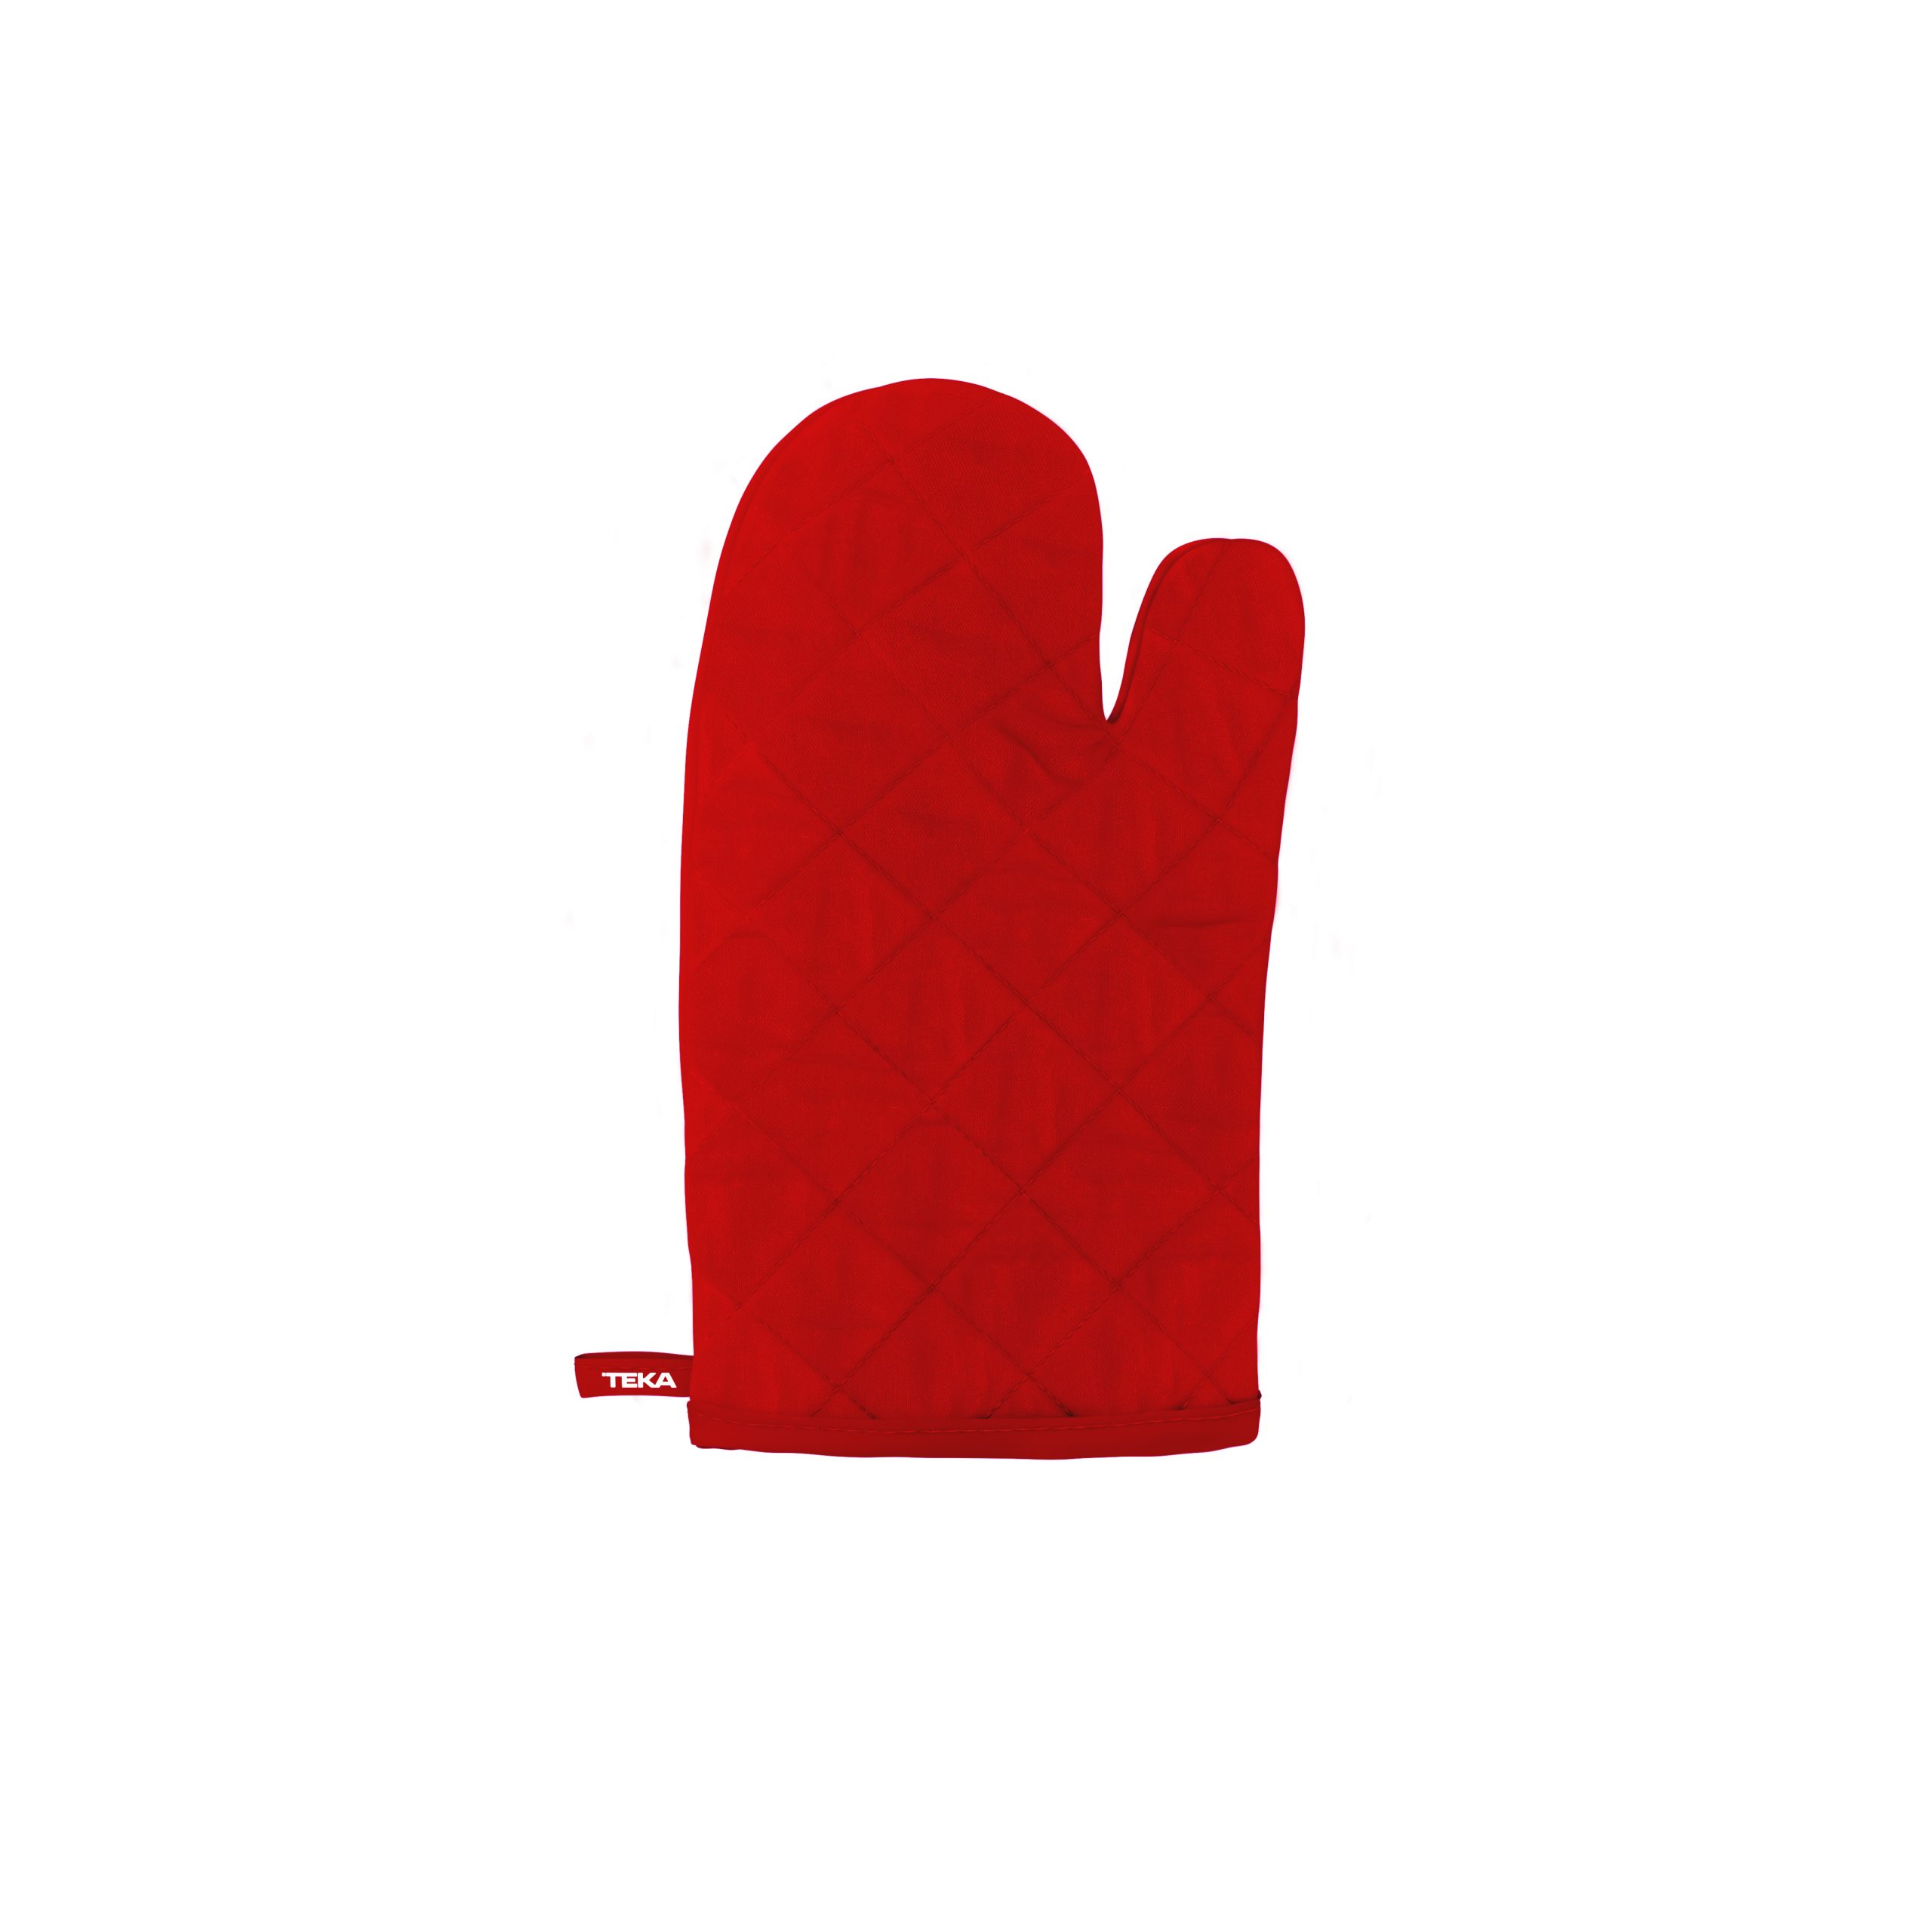 Render de producto Teka Group guante rojo